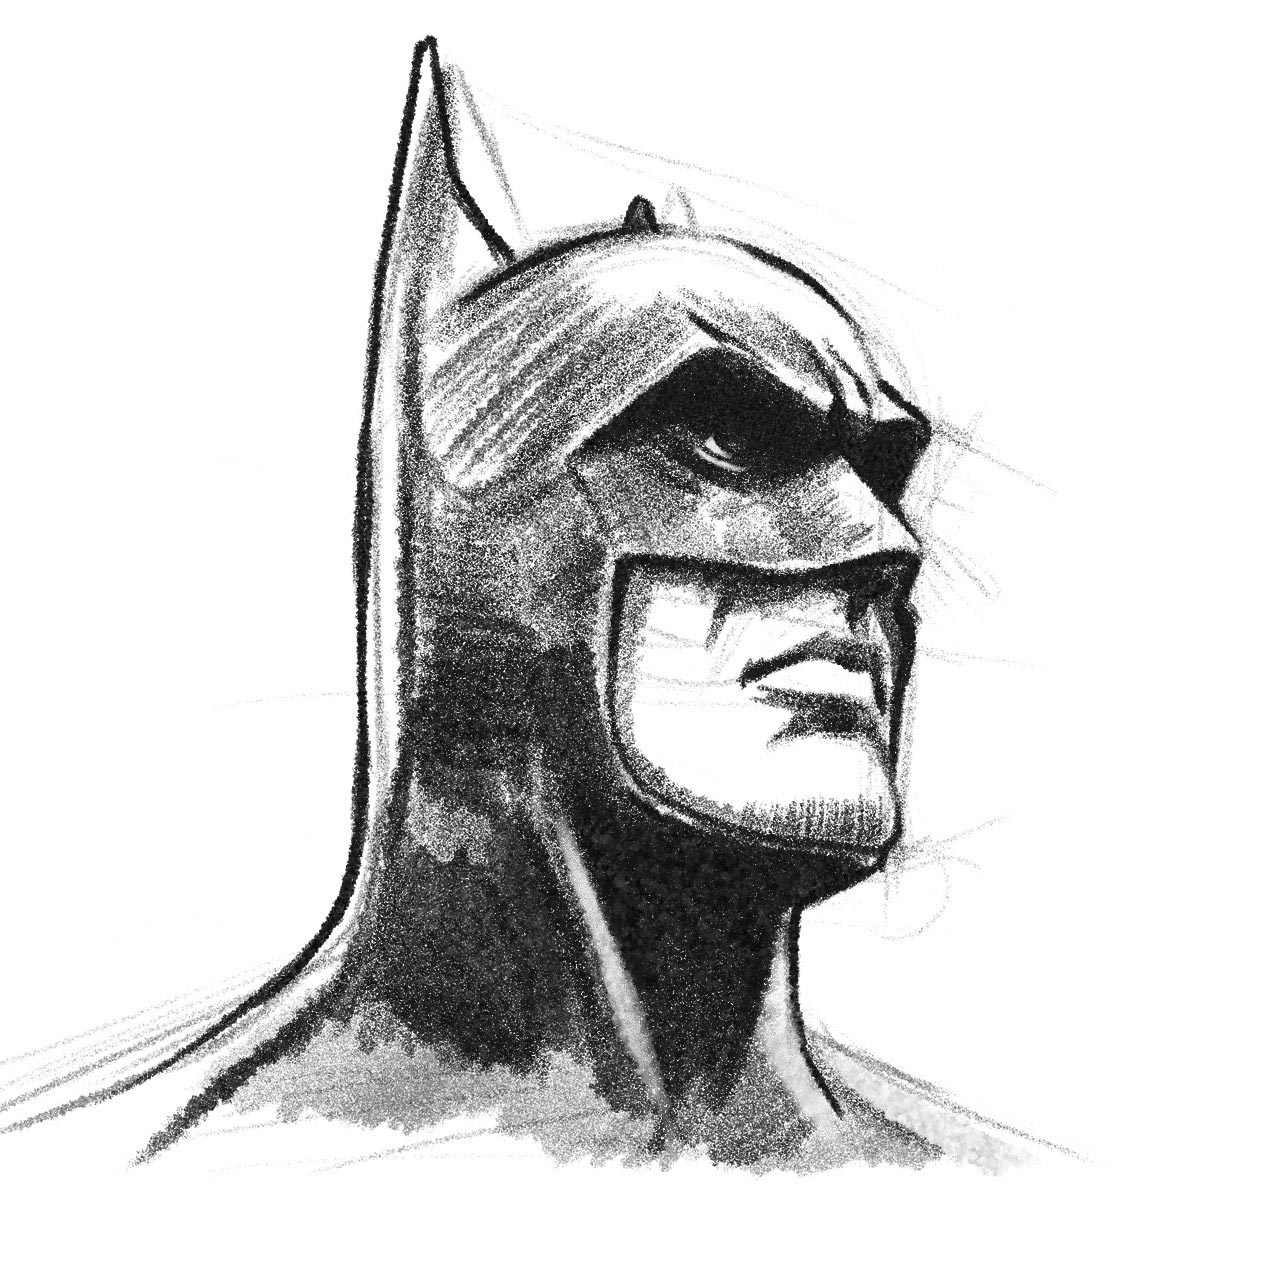 Batman drawing reference